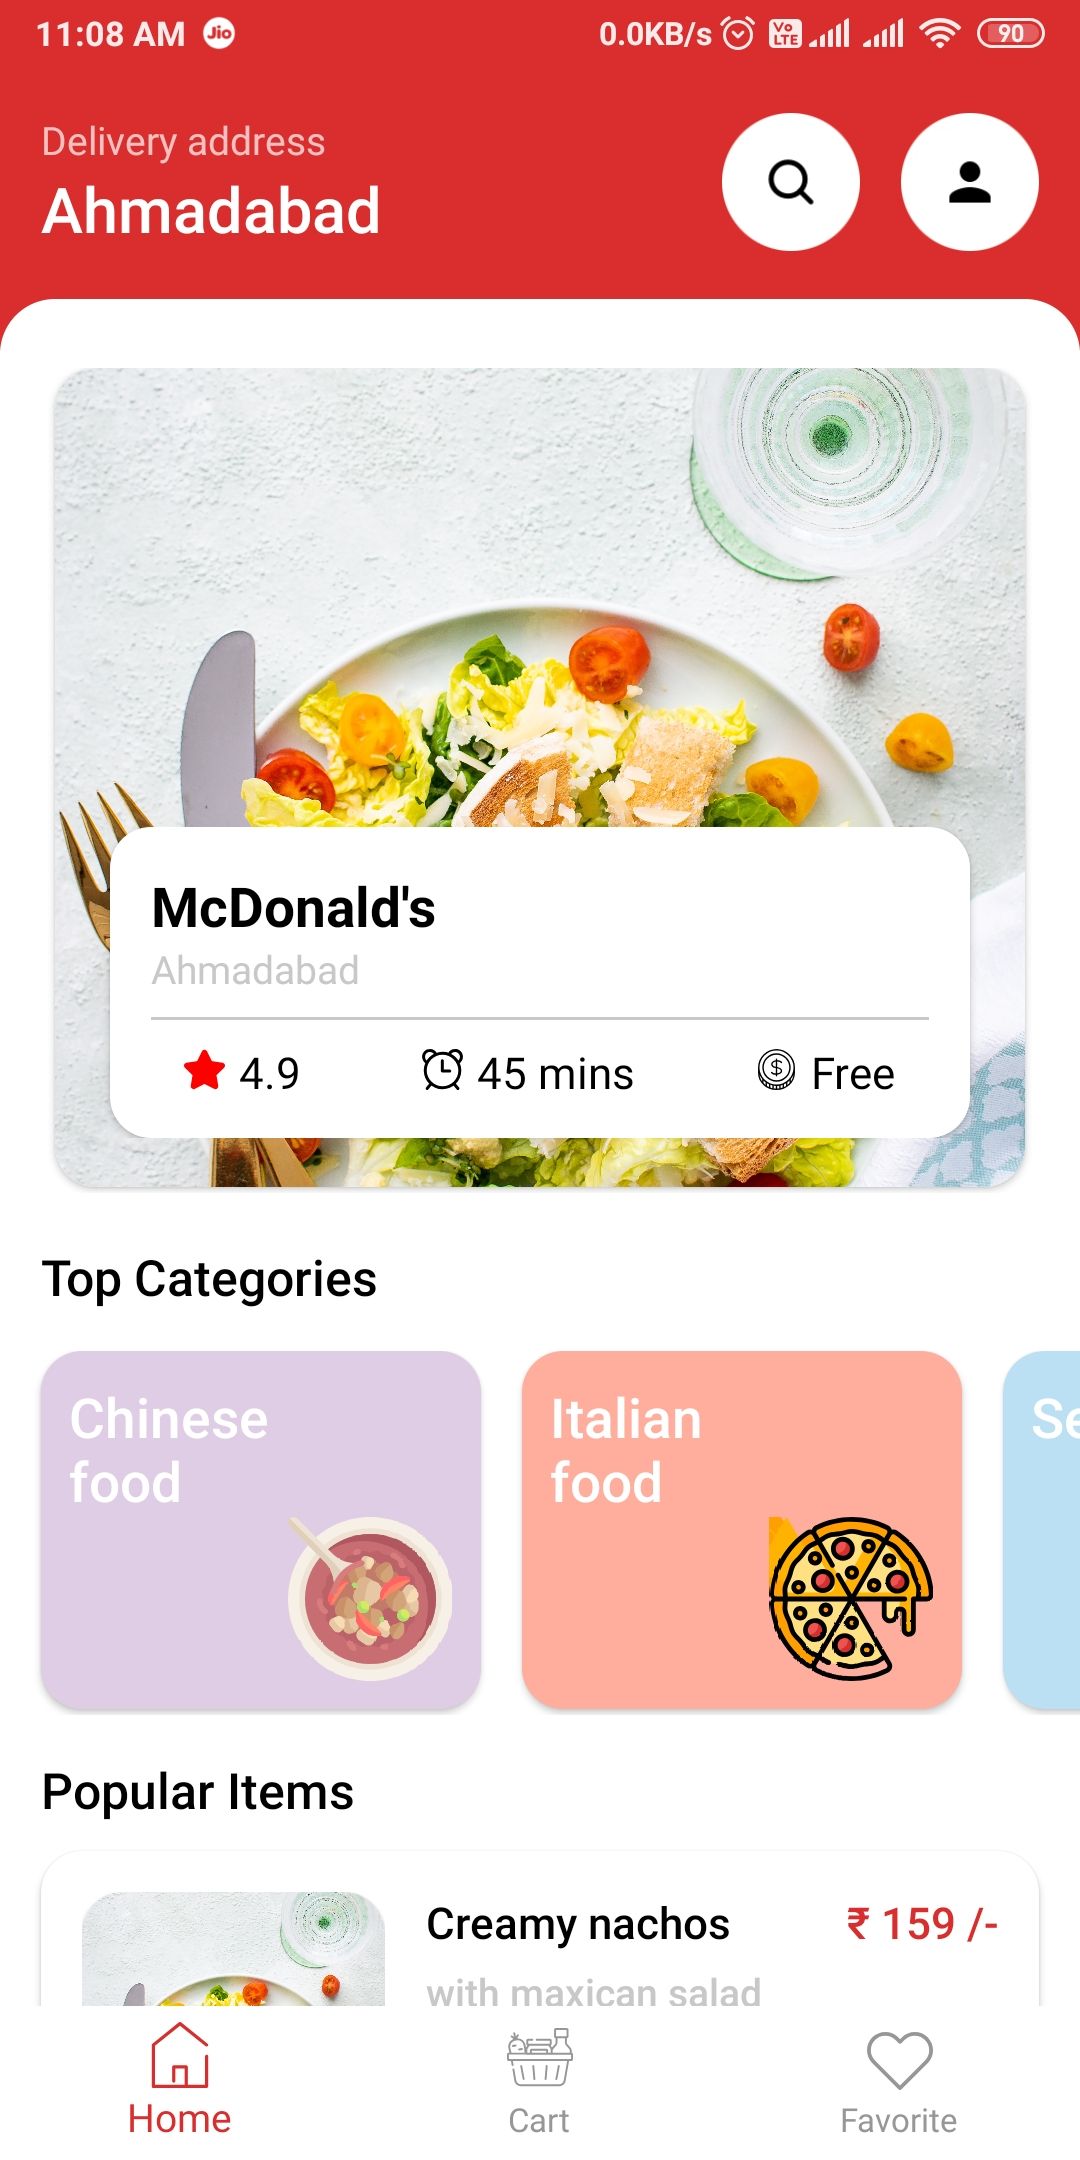 Food Delivery App XML UI Kit